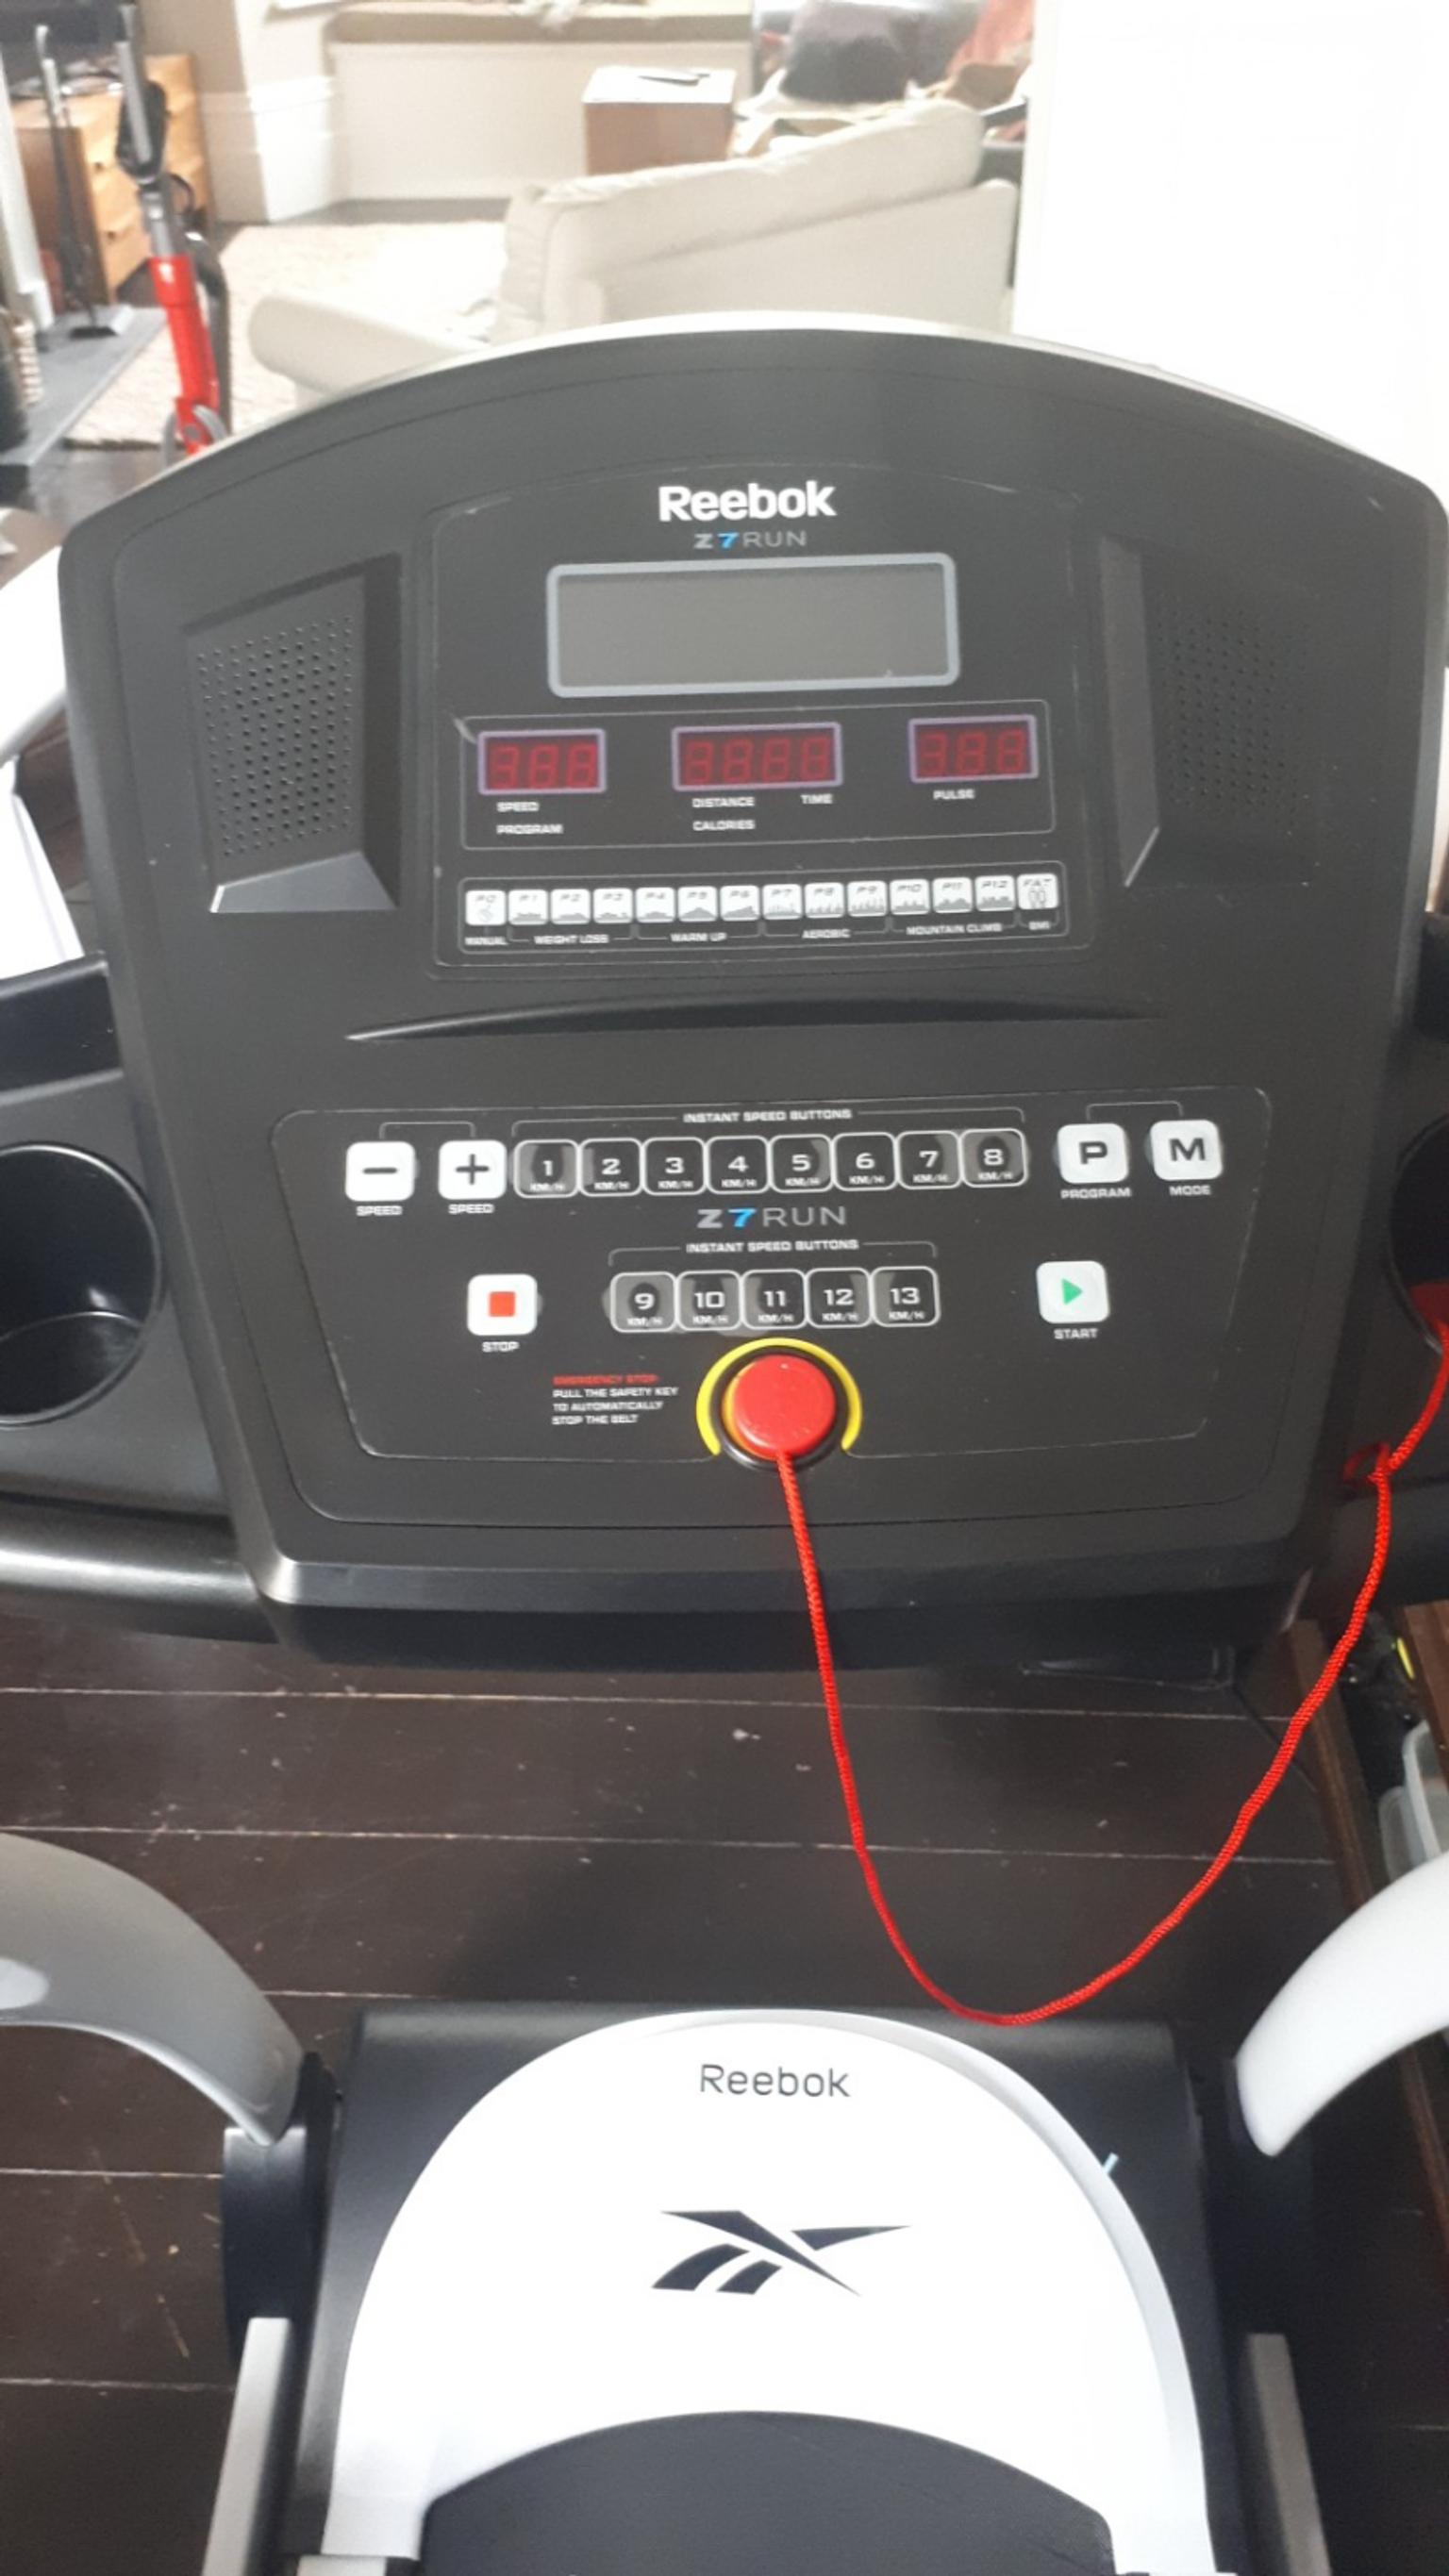 reebok z7 run treadmill